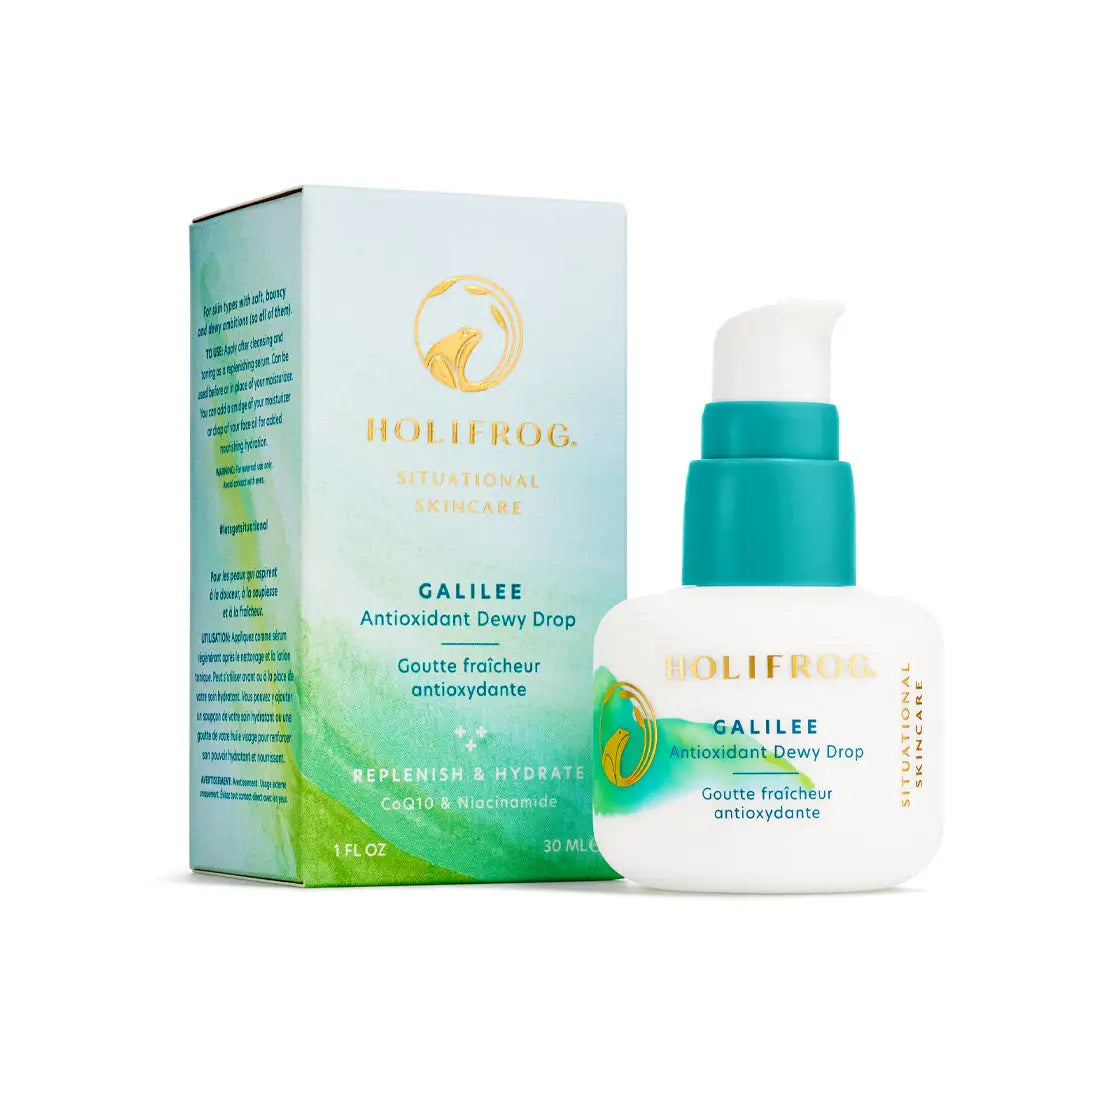 HoliFrog Galilee Antioxidant Dewy Drop 30ml - Free Shipping 